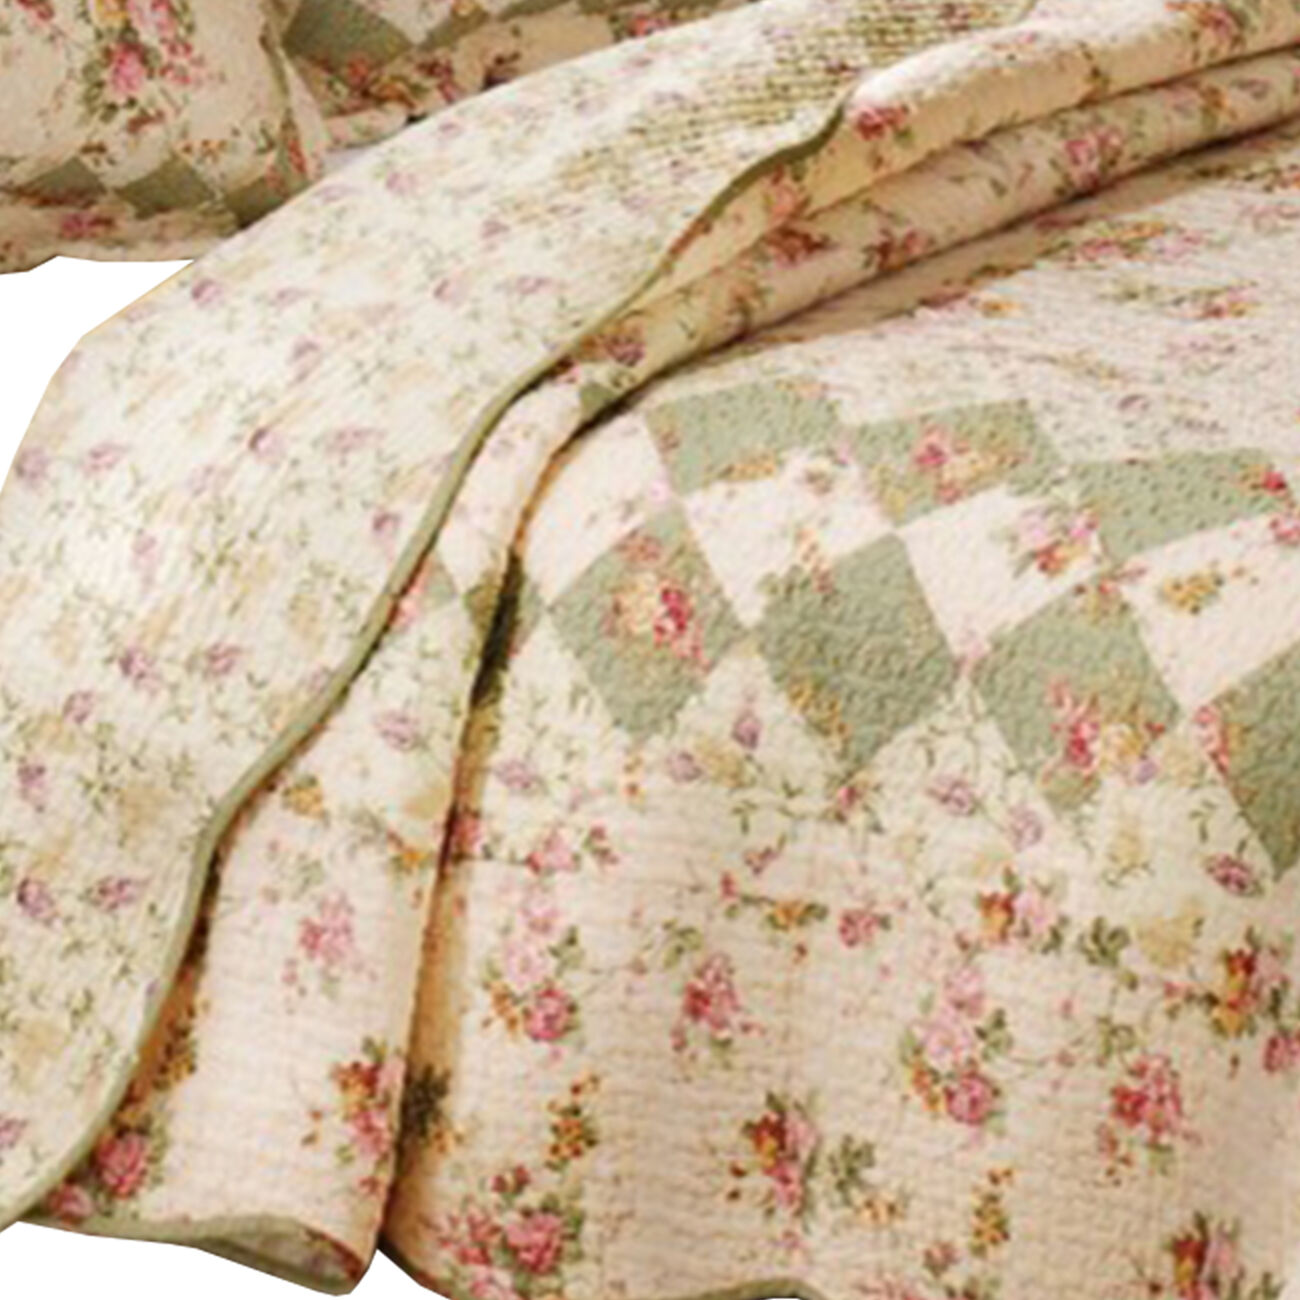 Denali 3 Piece Fabric Queen Size Quilt Set with Floral Prints, Multicolor